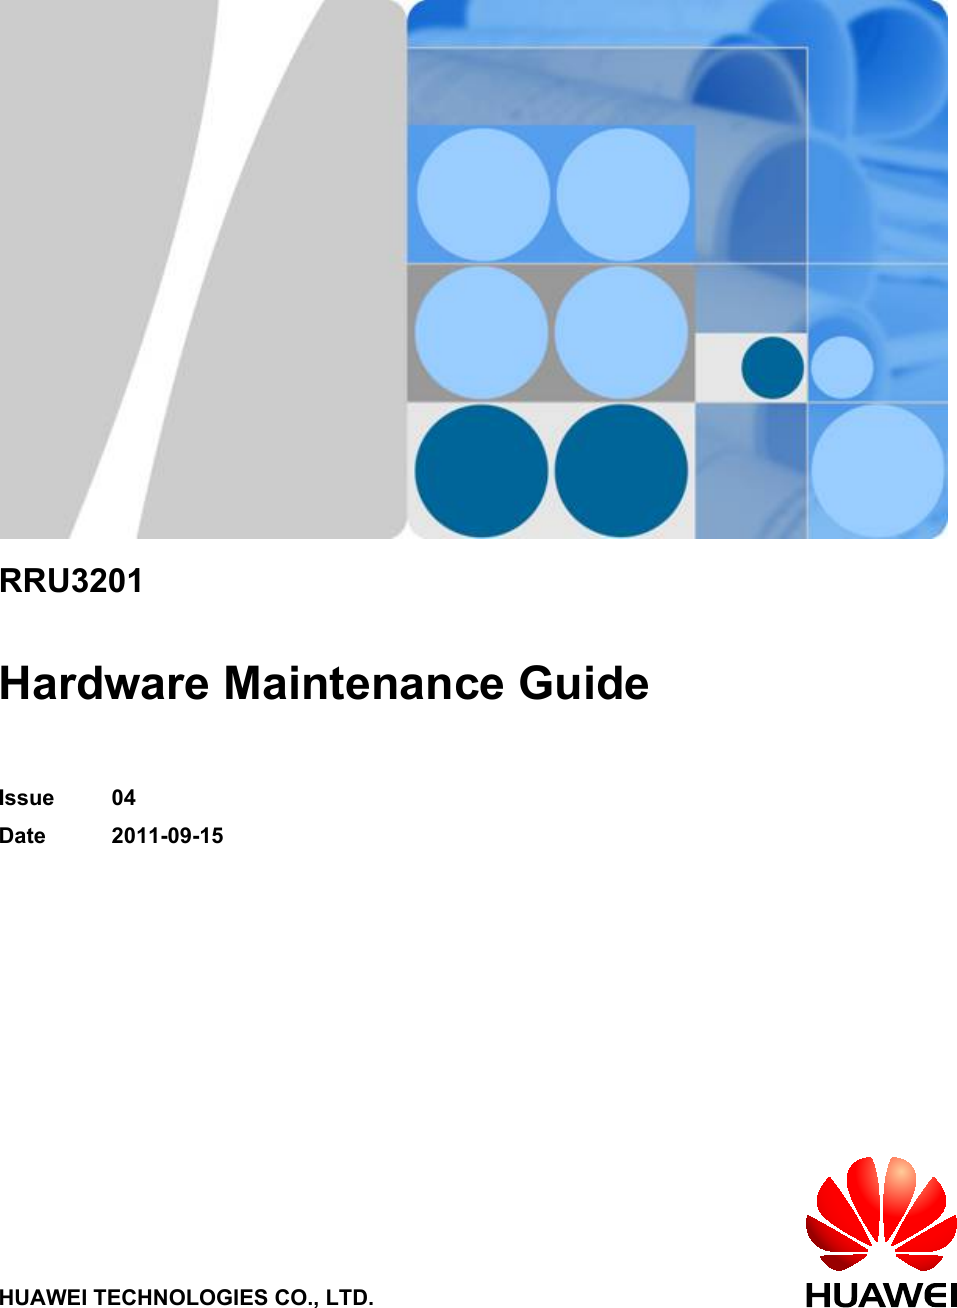 RRU3201Hardware Maintenance GuideIssue 04Date 2011-09-15HUAWEI TECHNOLOGIES CO., LTD.